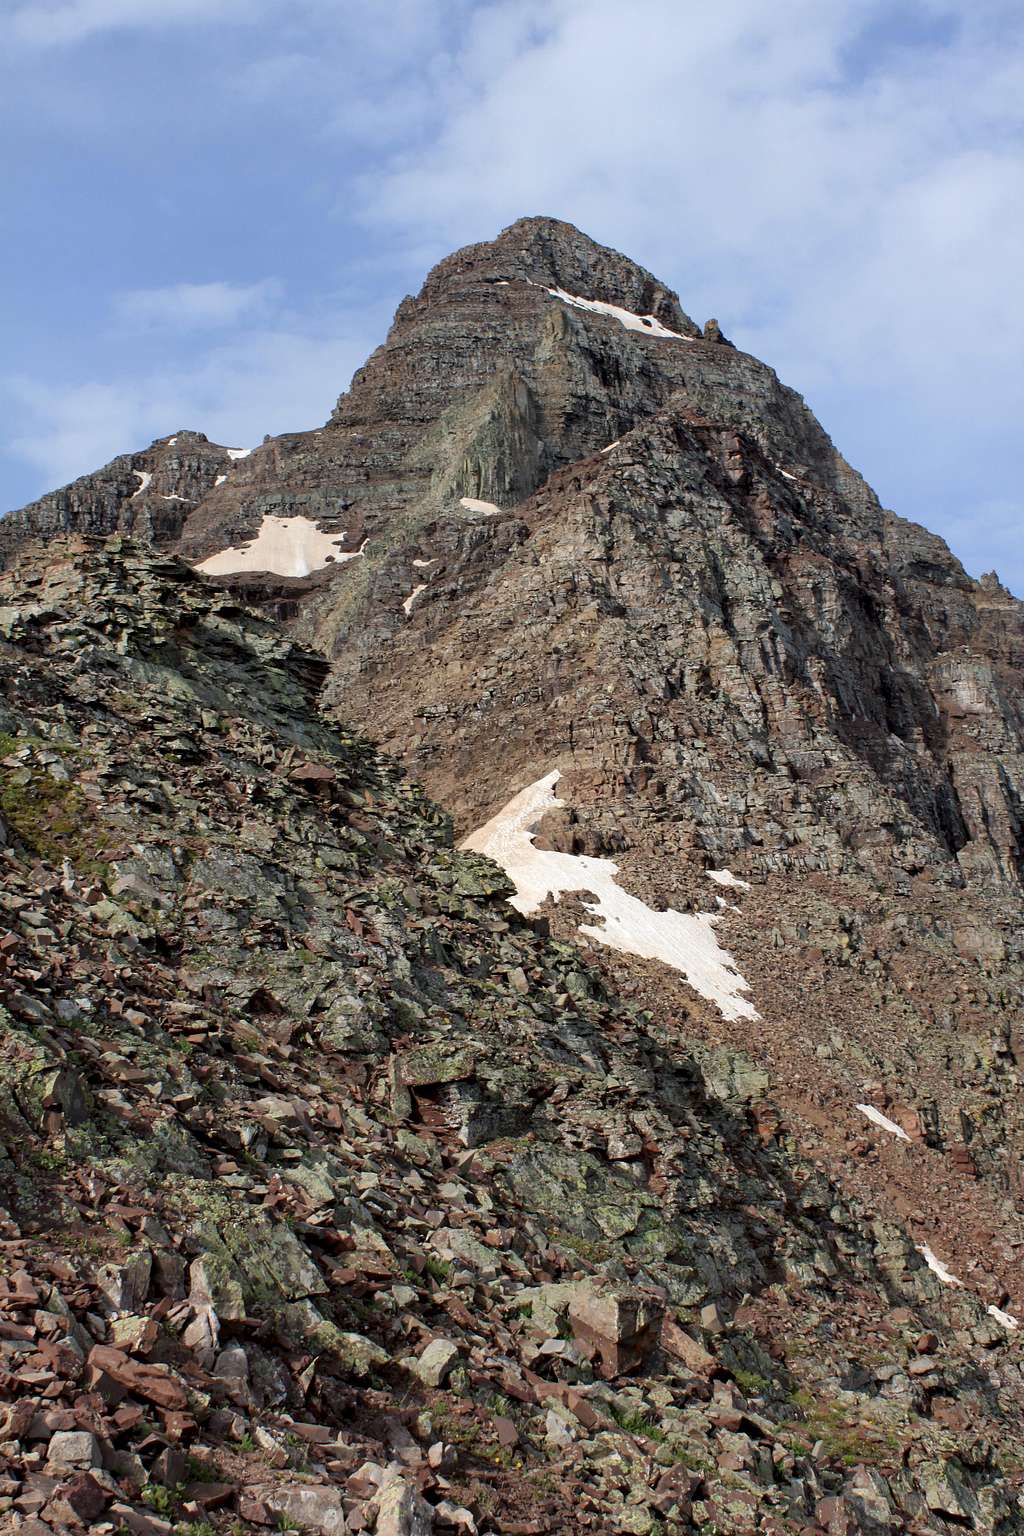 Pyramid Peak from the saddle